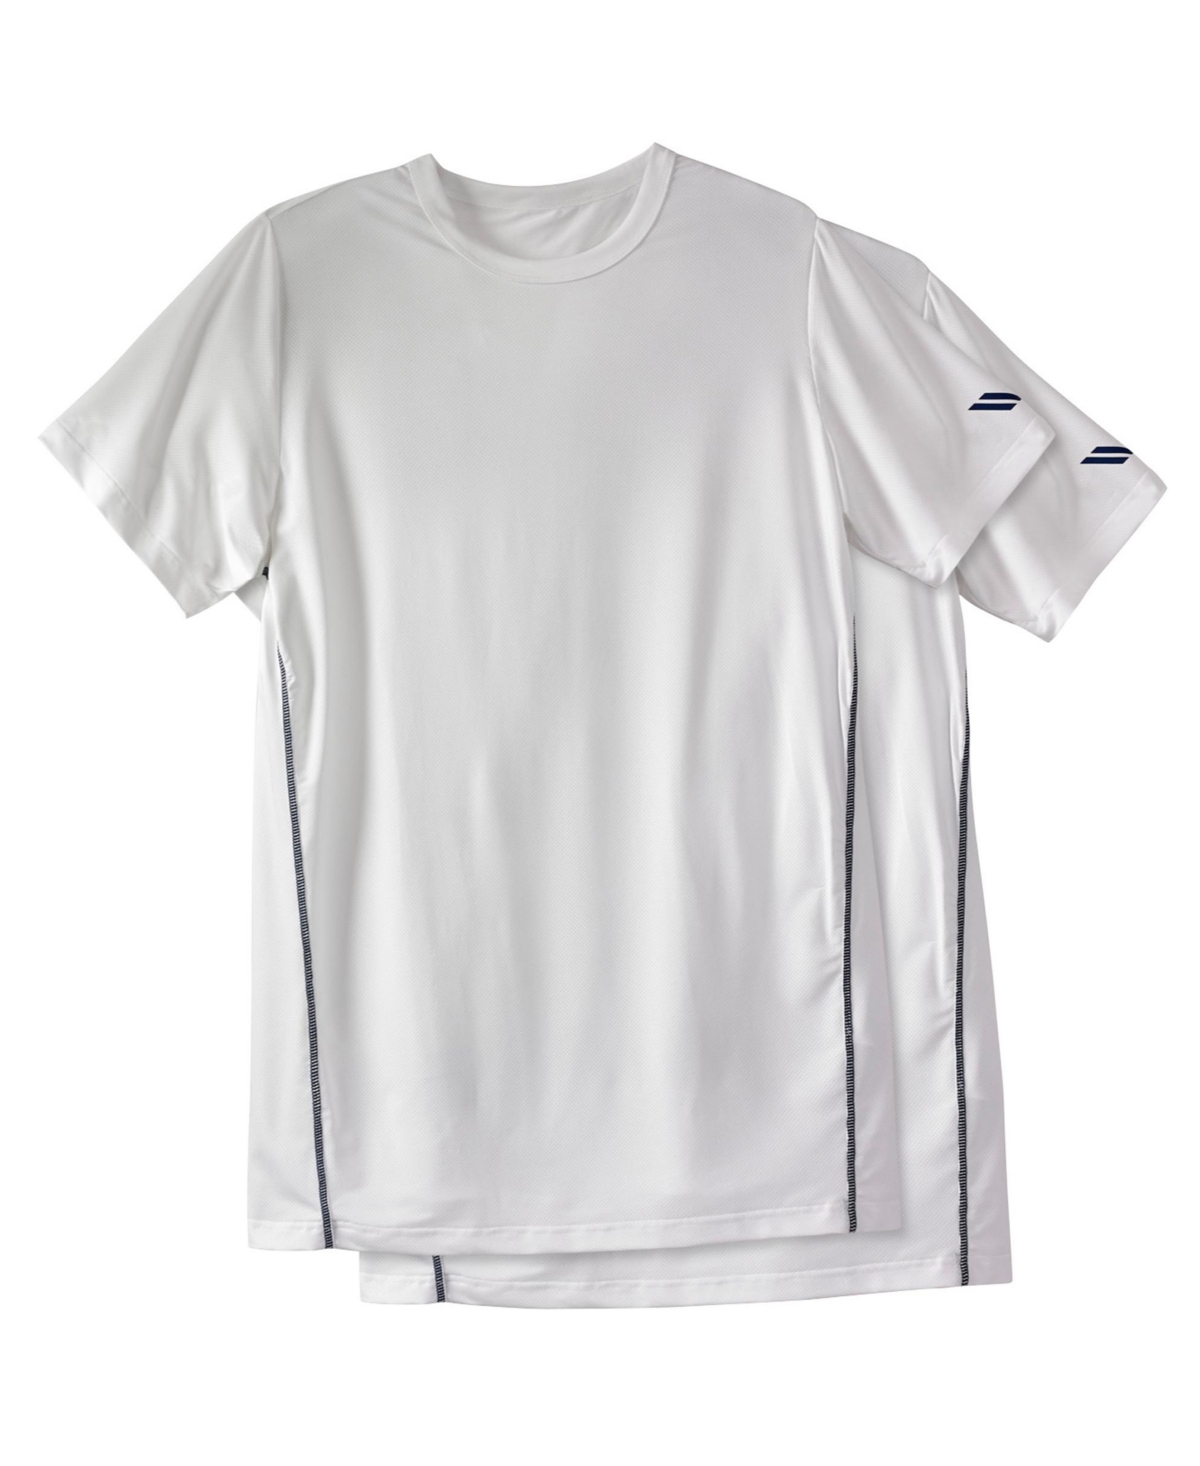 Big & Tall Ks Sport Performance Crewneck Undershirt 2-Pack - White